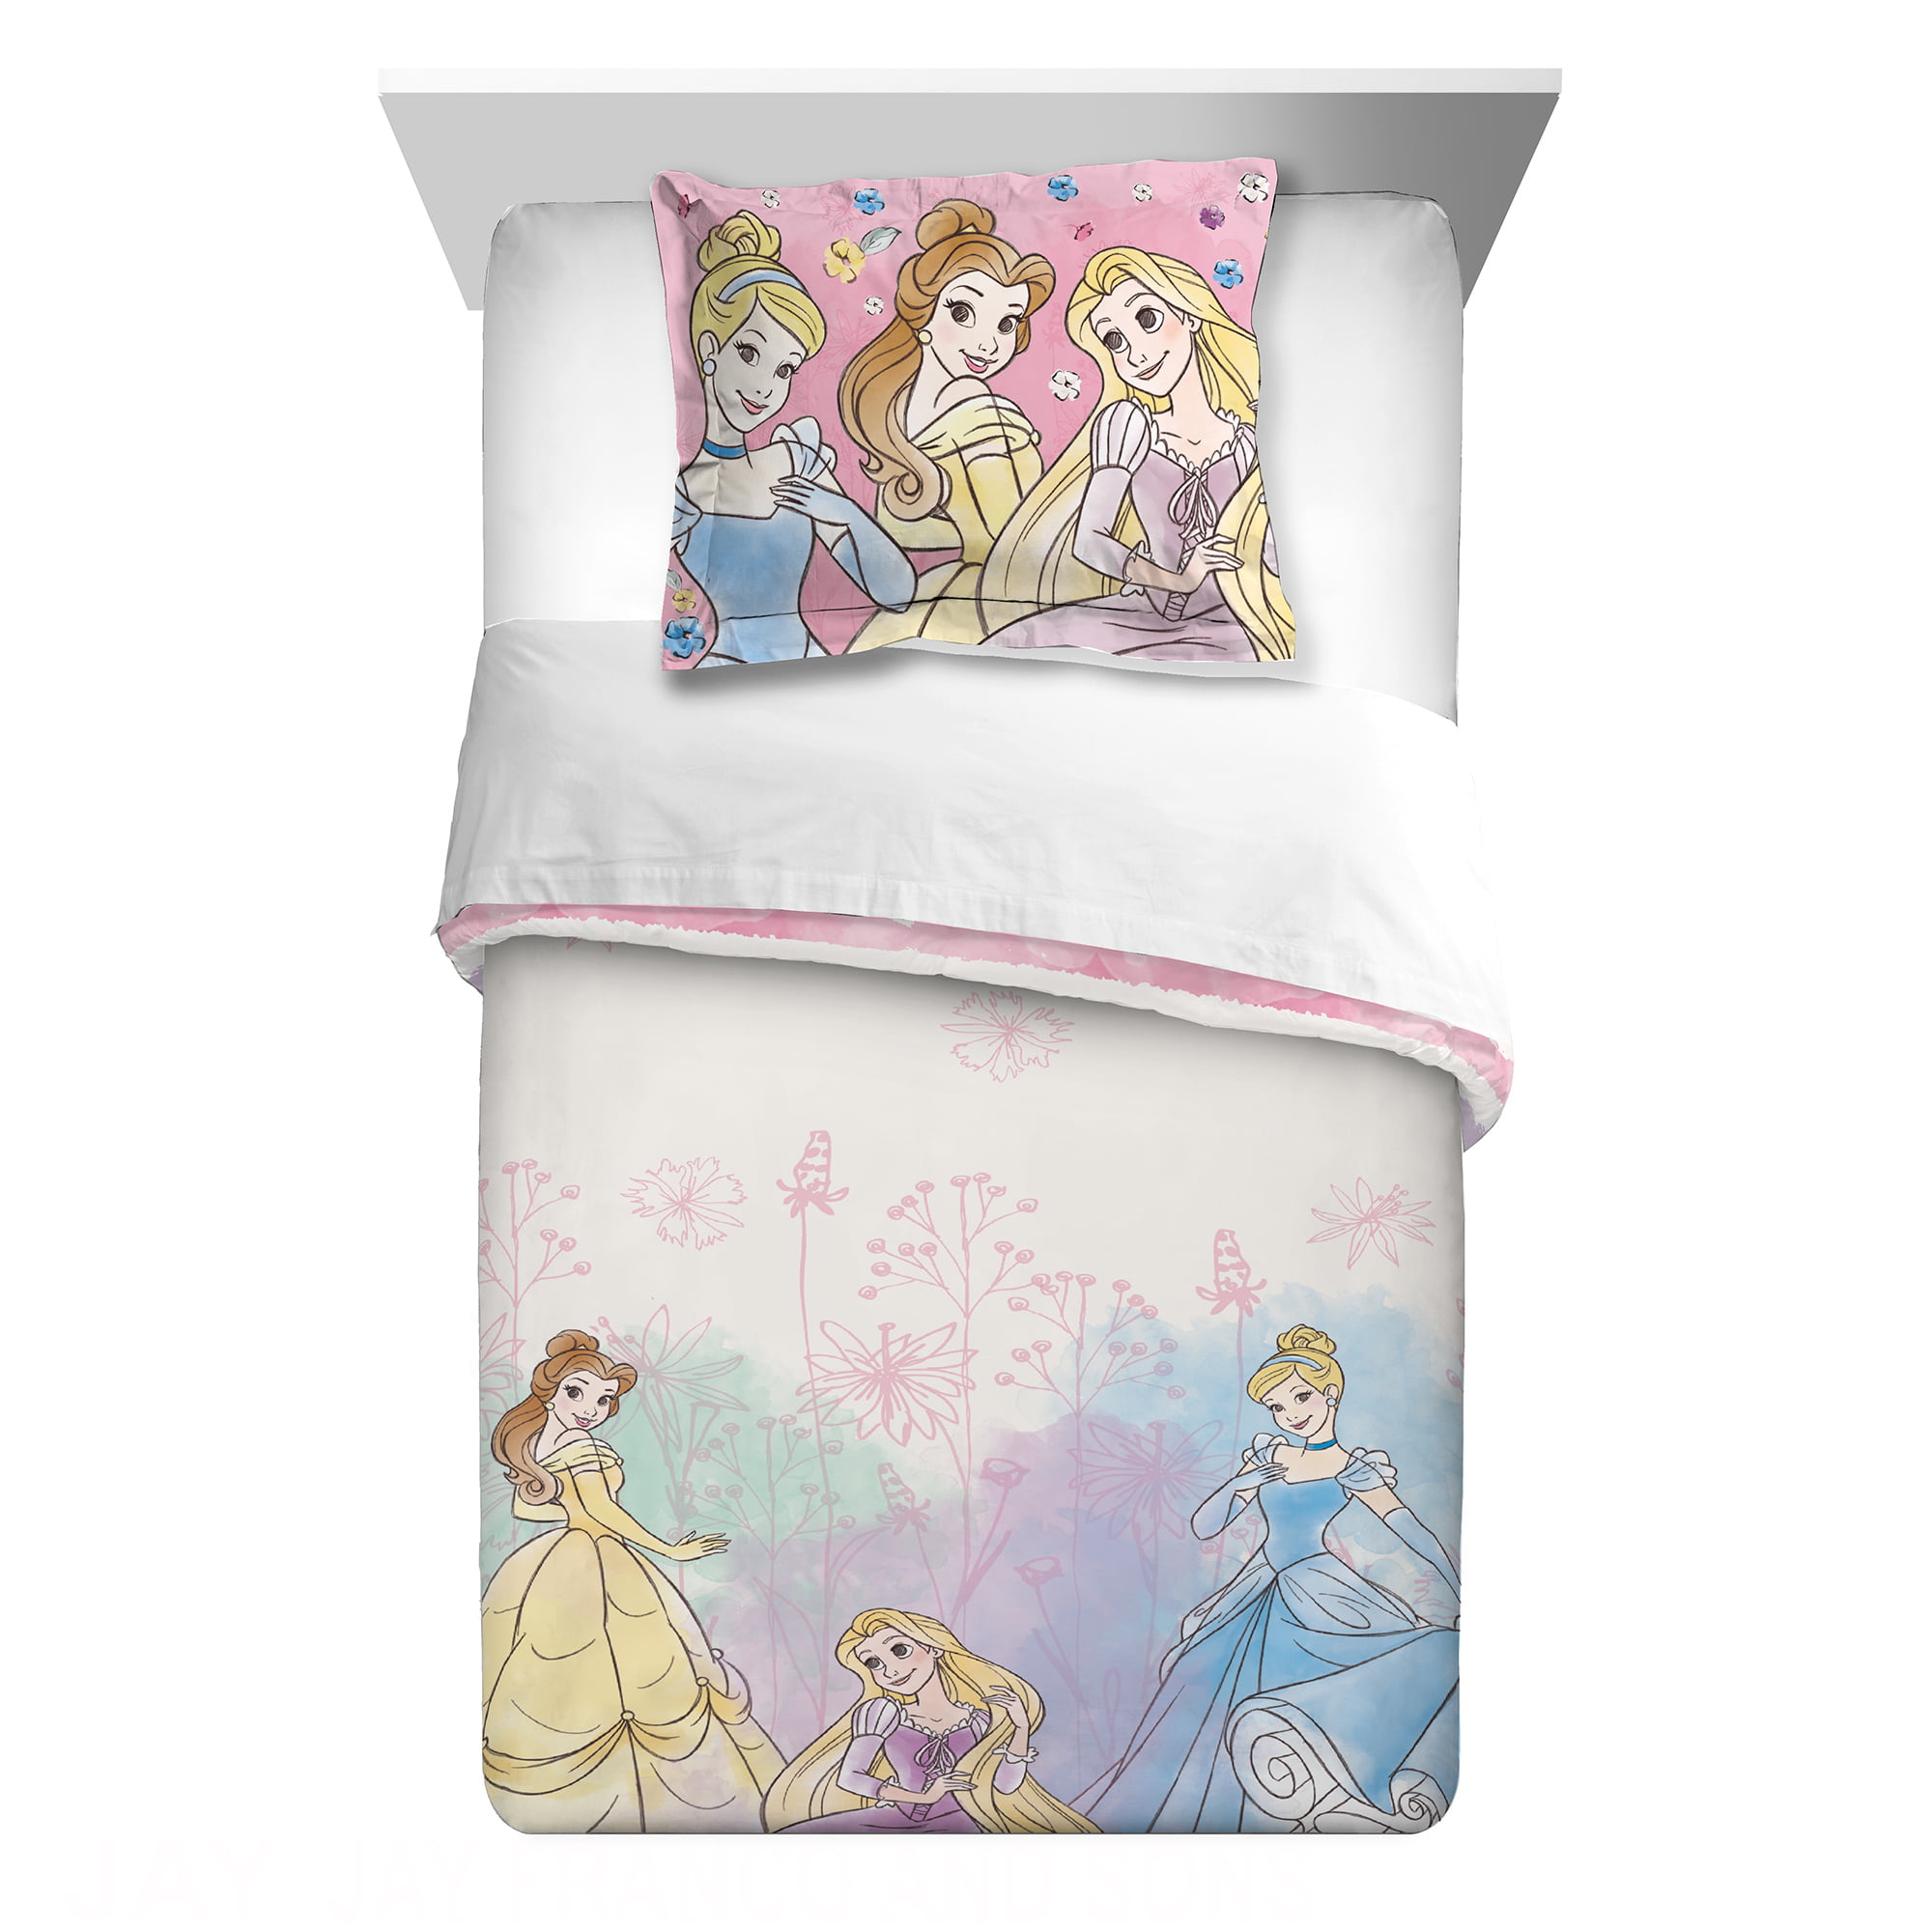 Disney Princess Kids Bedding Soft Microfiber Reversible Comforter Twin/Full Size 72” x 86” Pink/Purple 